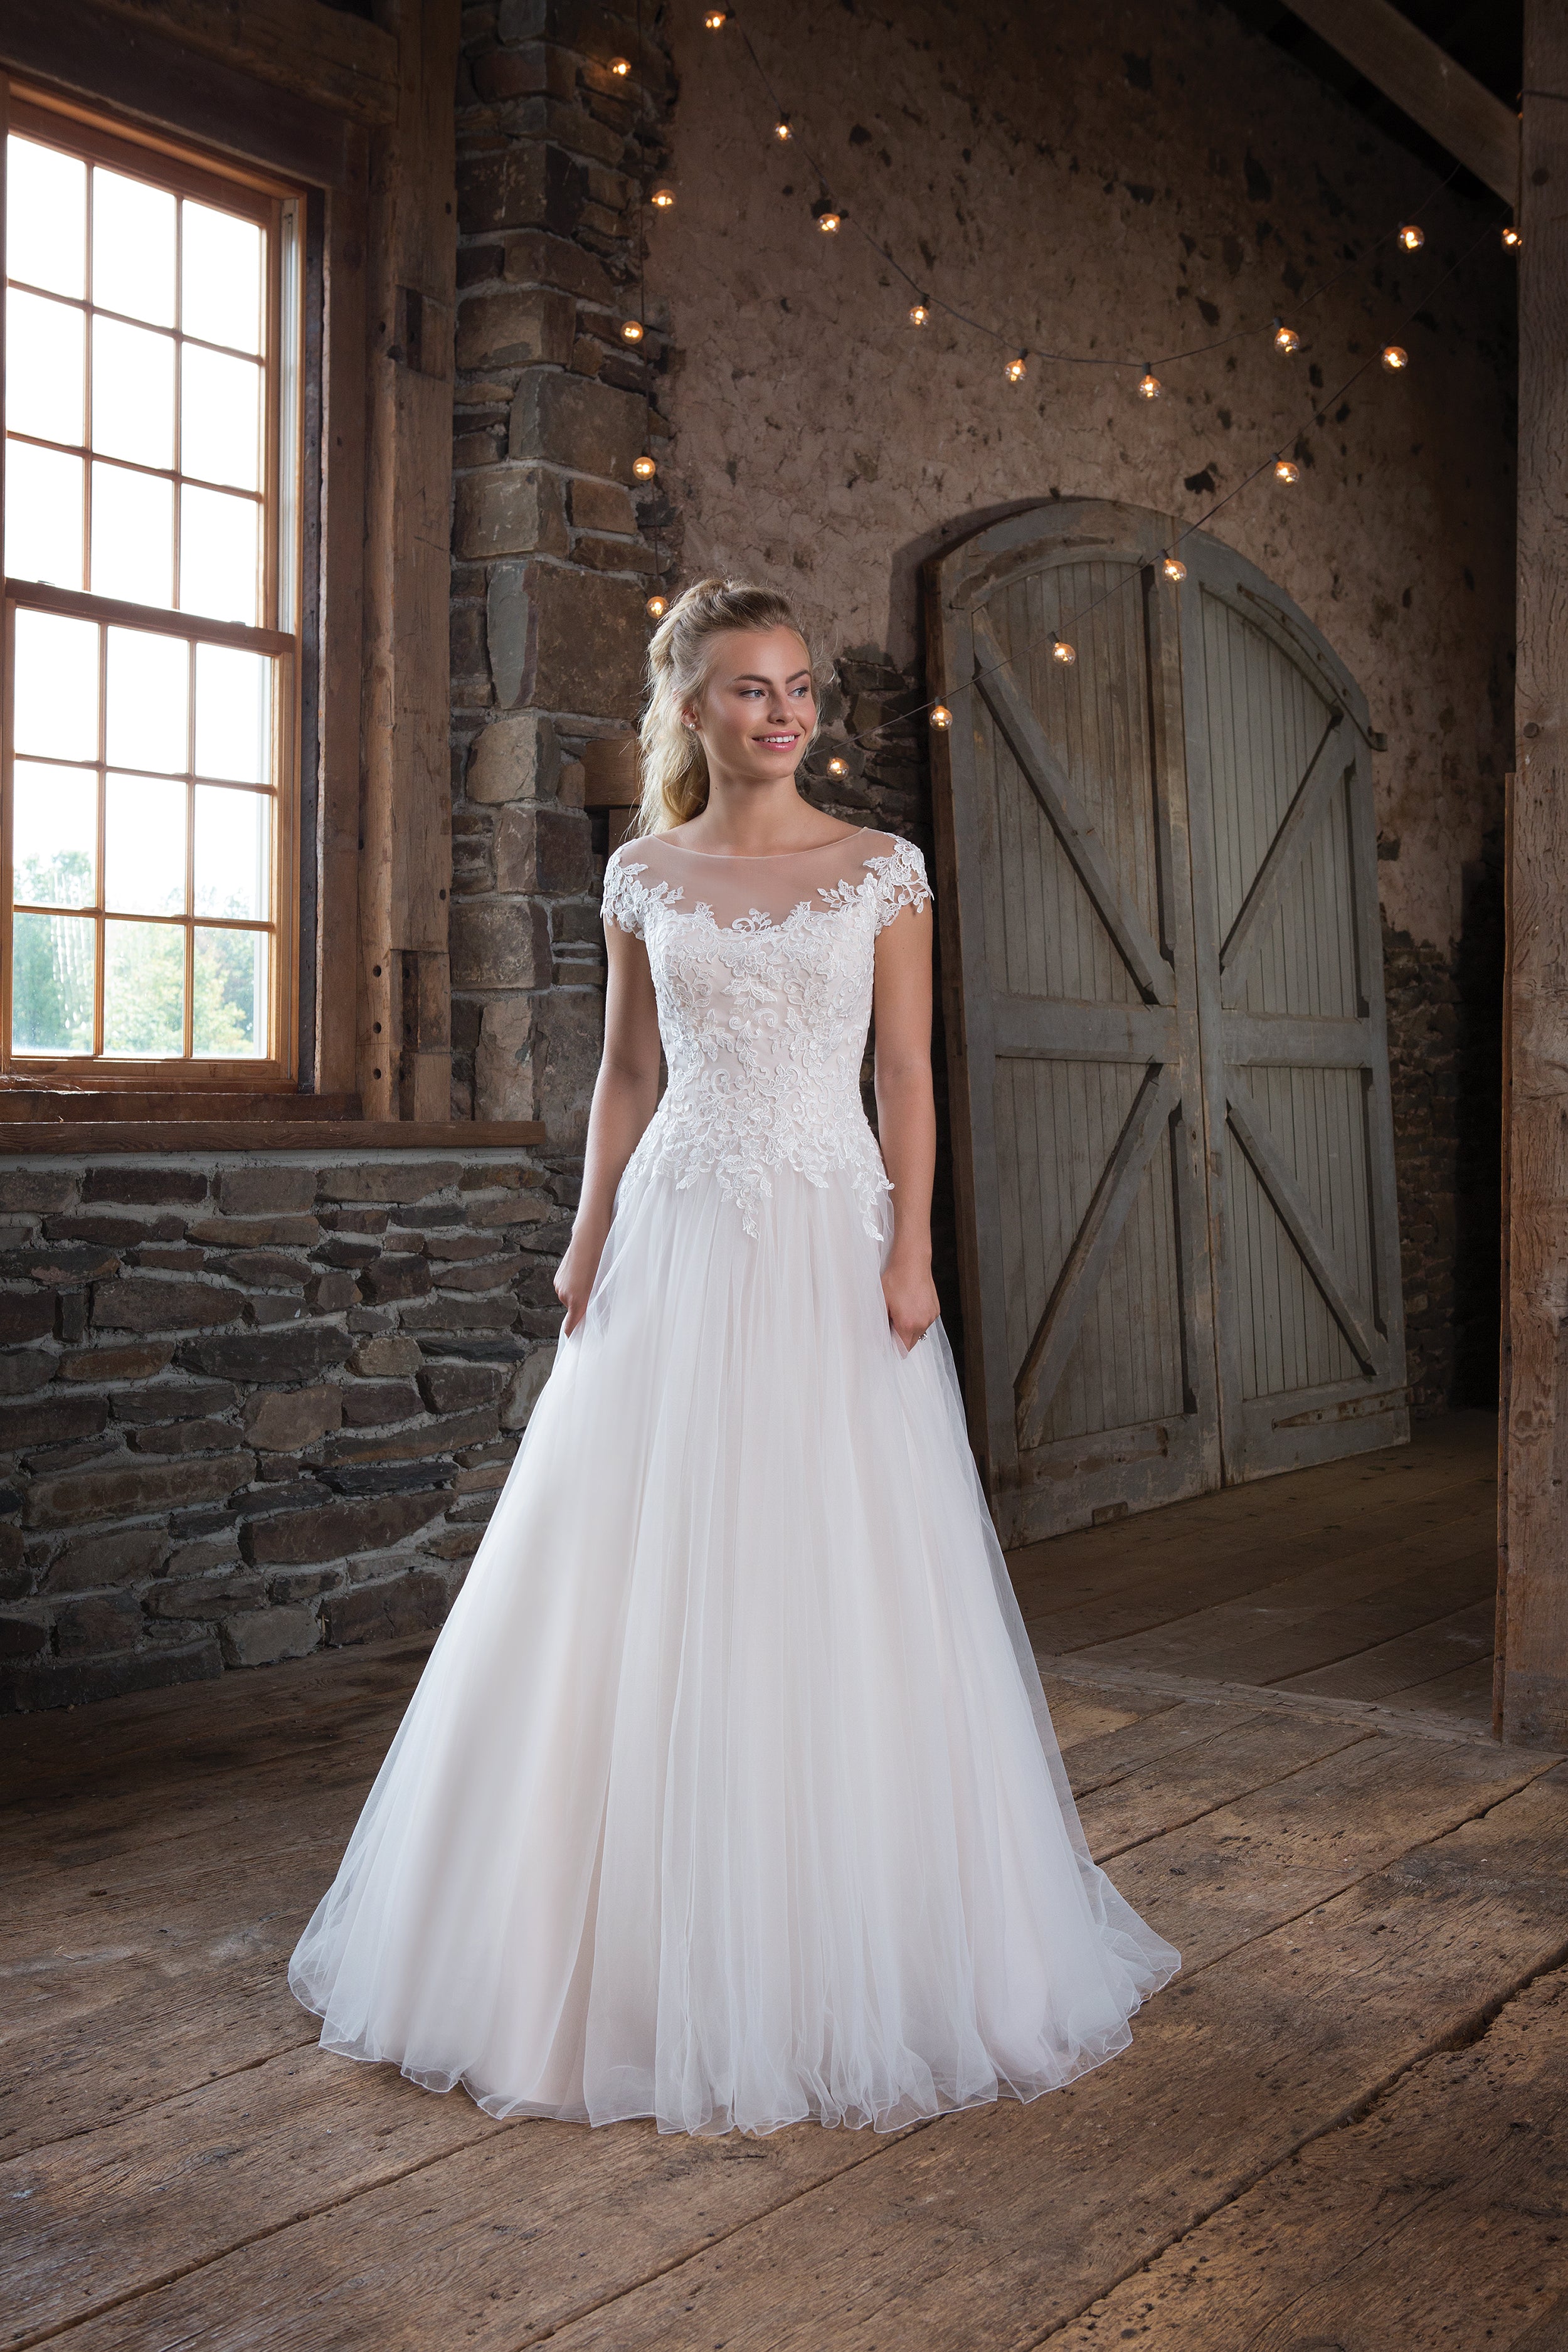 *NEW* Sweetheart Bridal Designer Wedding Gown - #1119